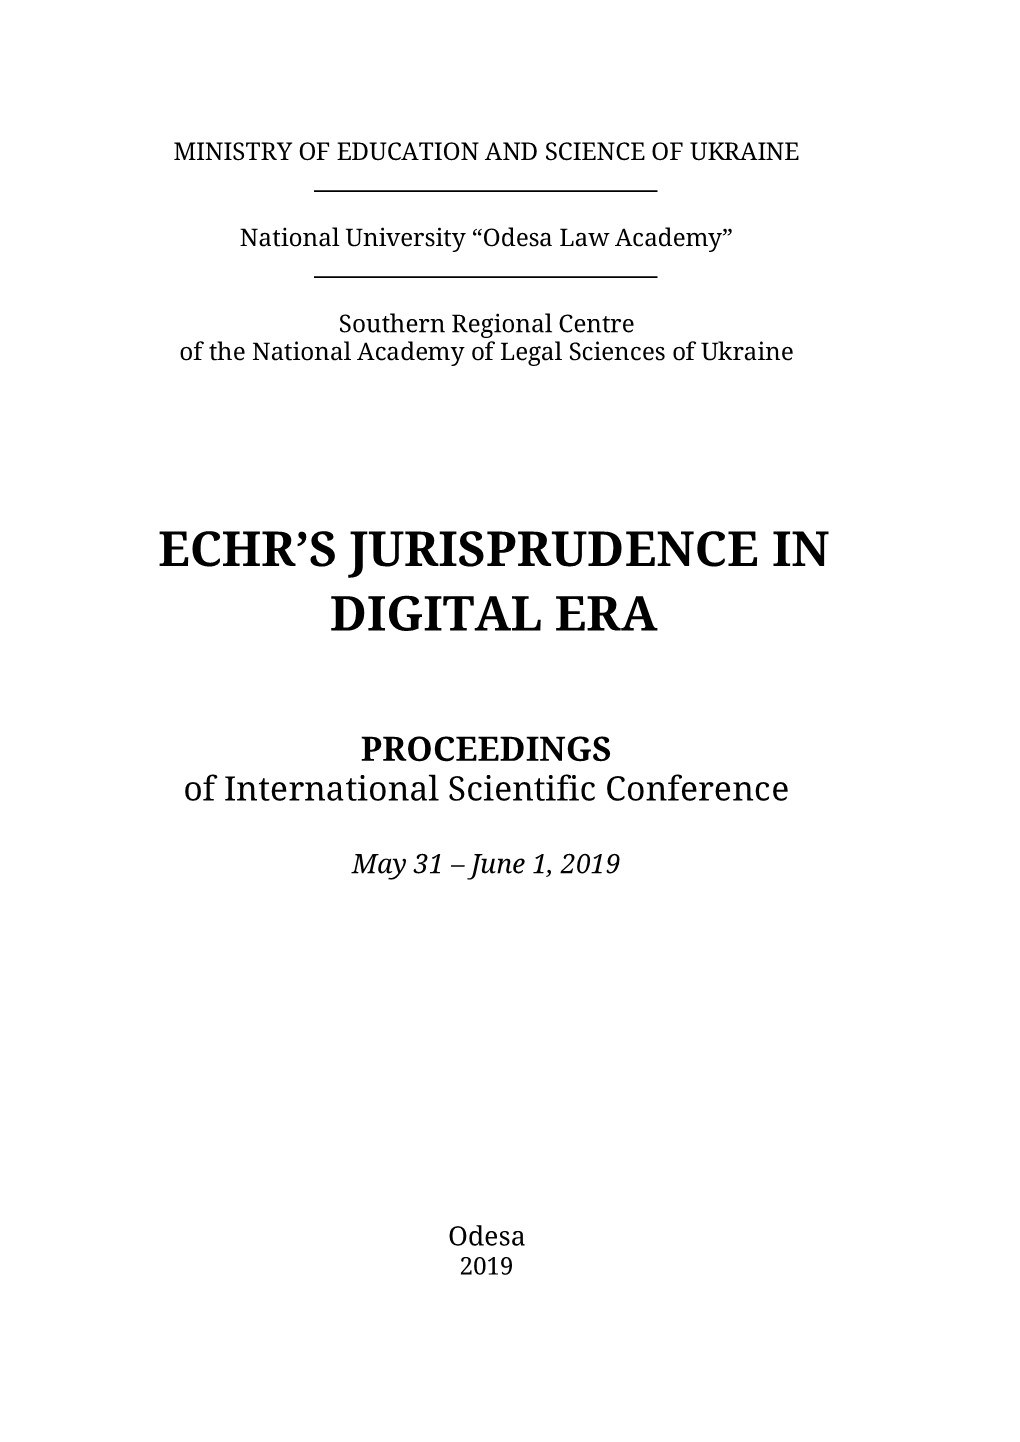 Echr's Jurisprudence in Digital